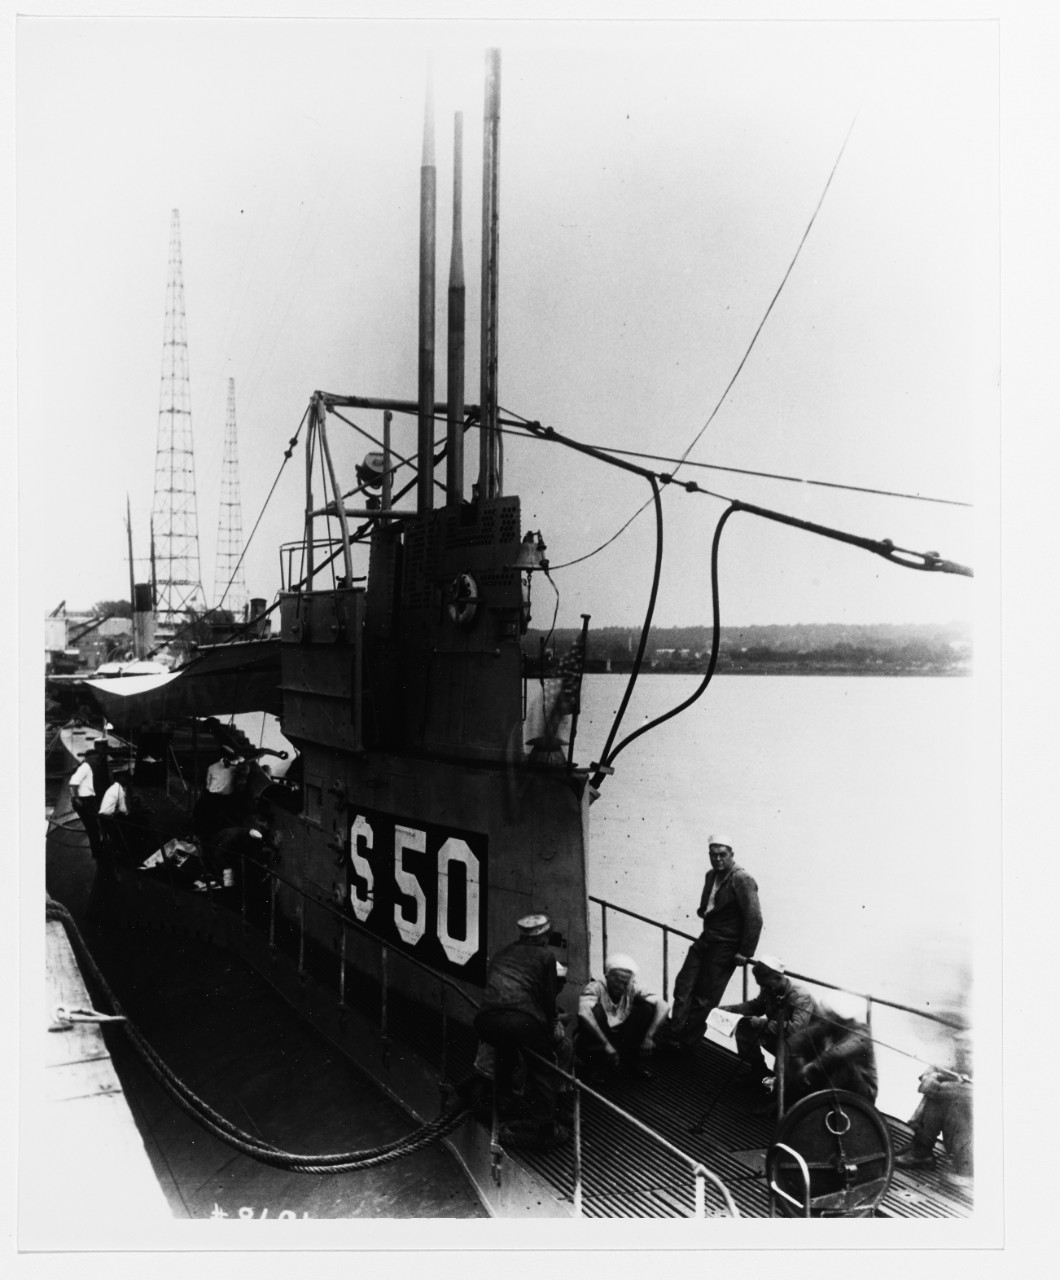 USS S-50 (SS-161)